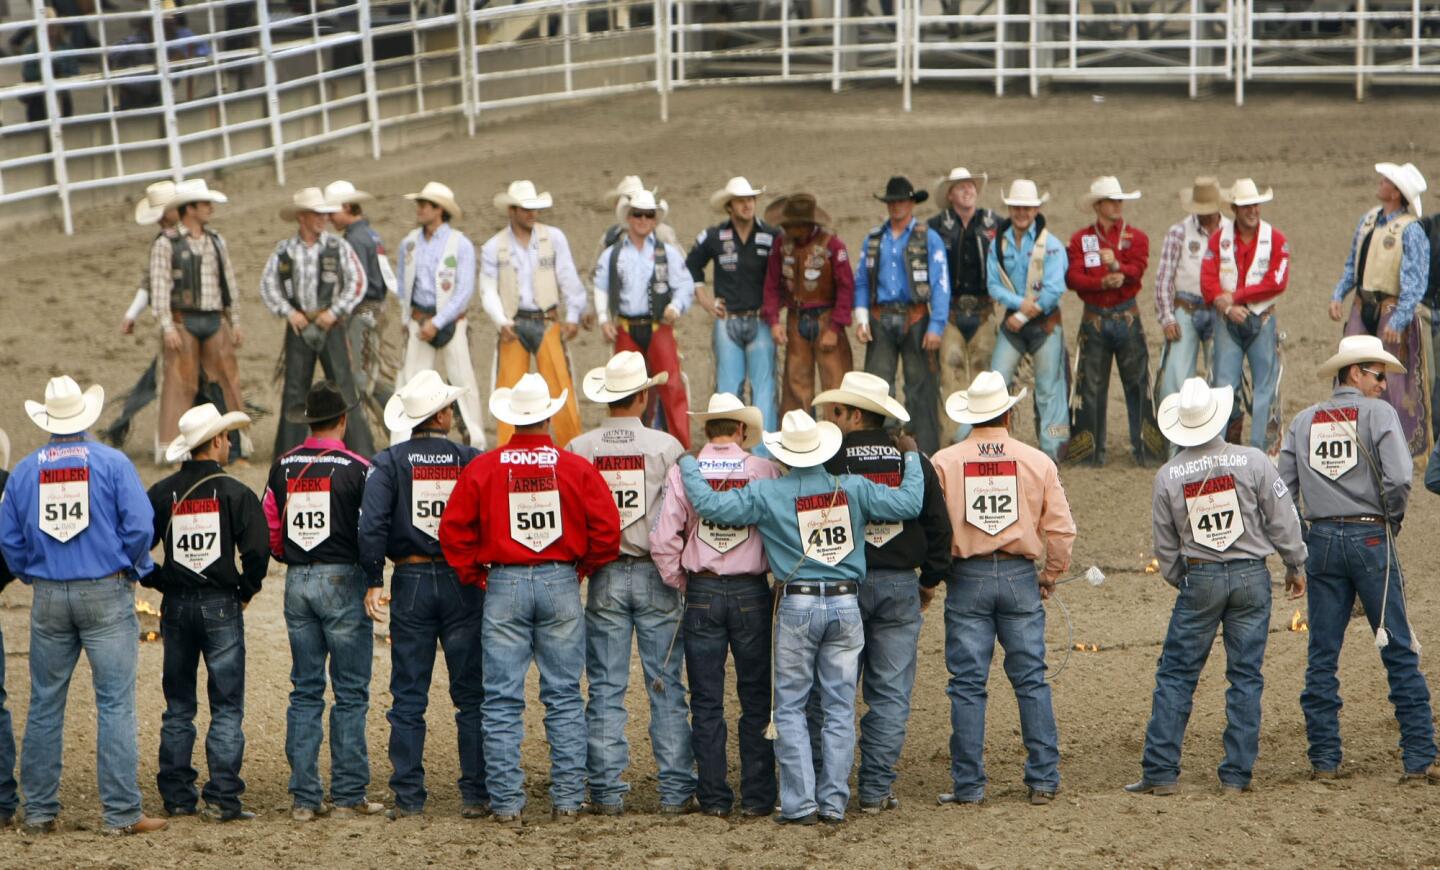 Cowboy gathering